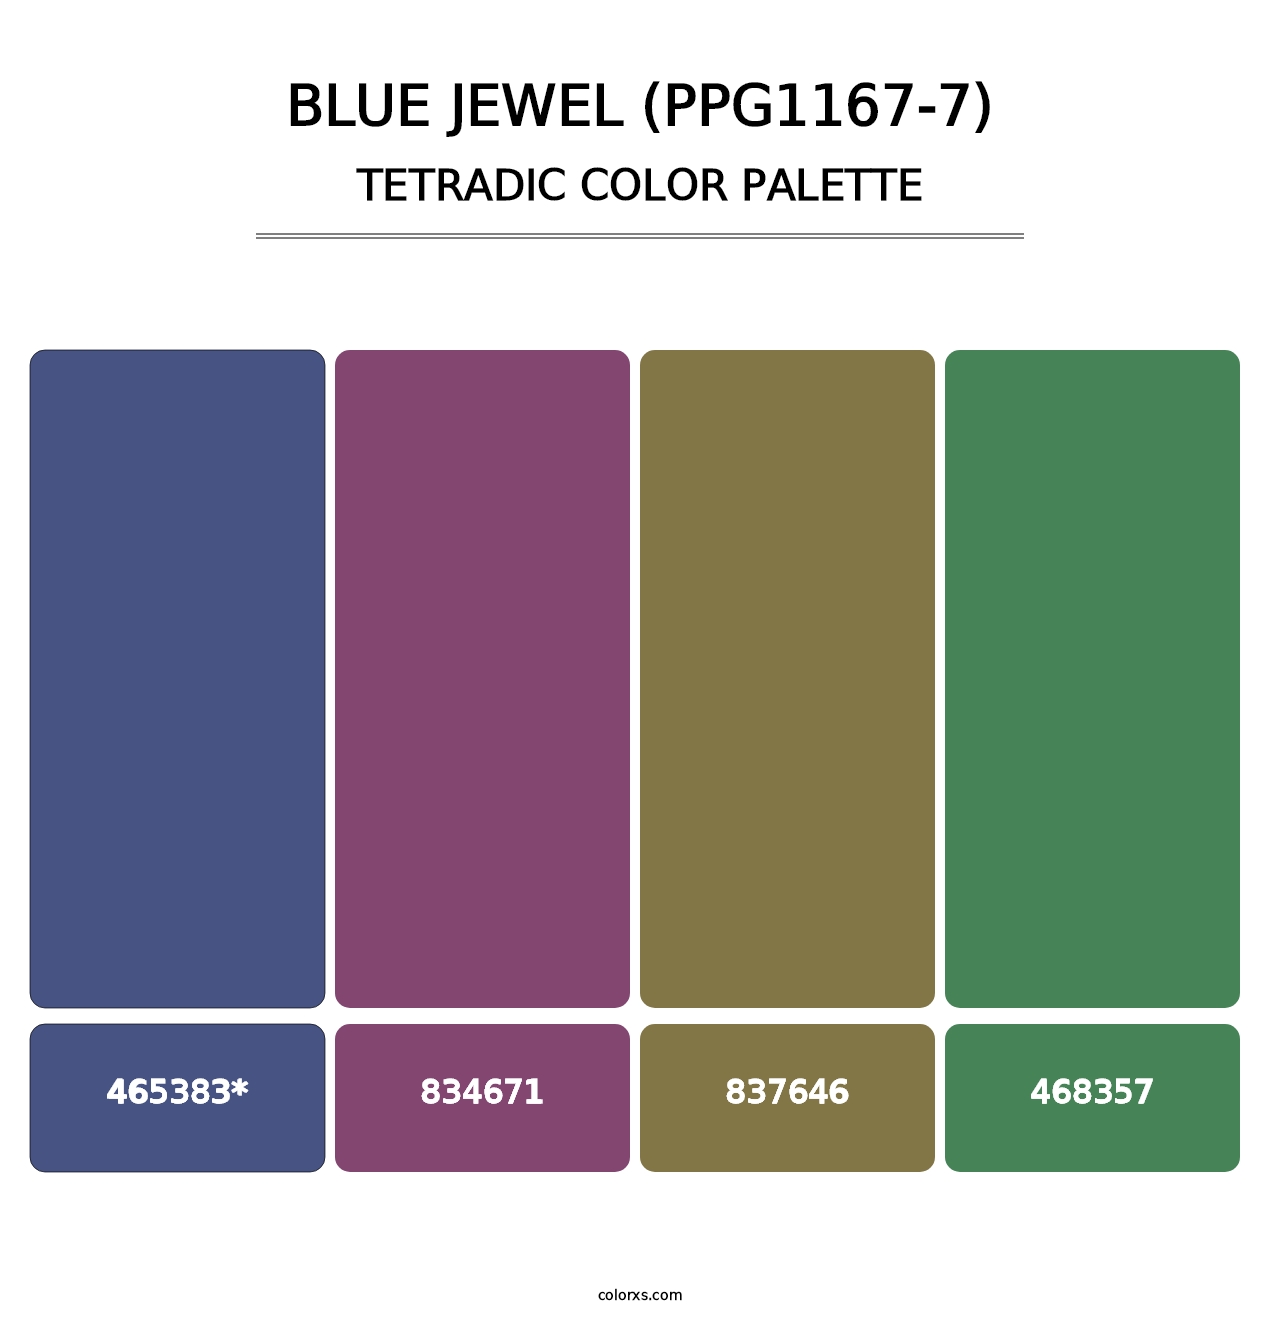 Blue Jewel (PPG1167-7) - Tetradic Color Palette